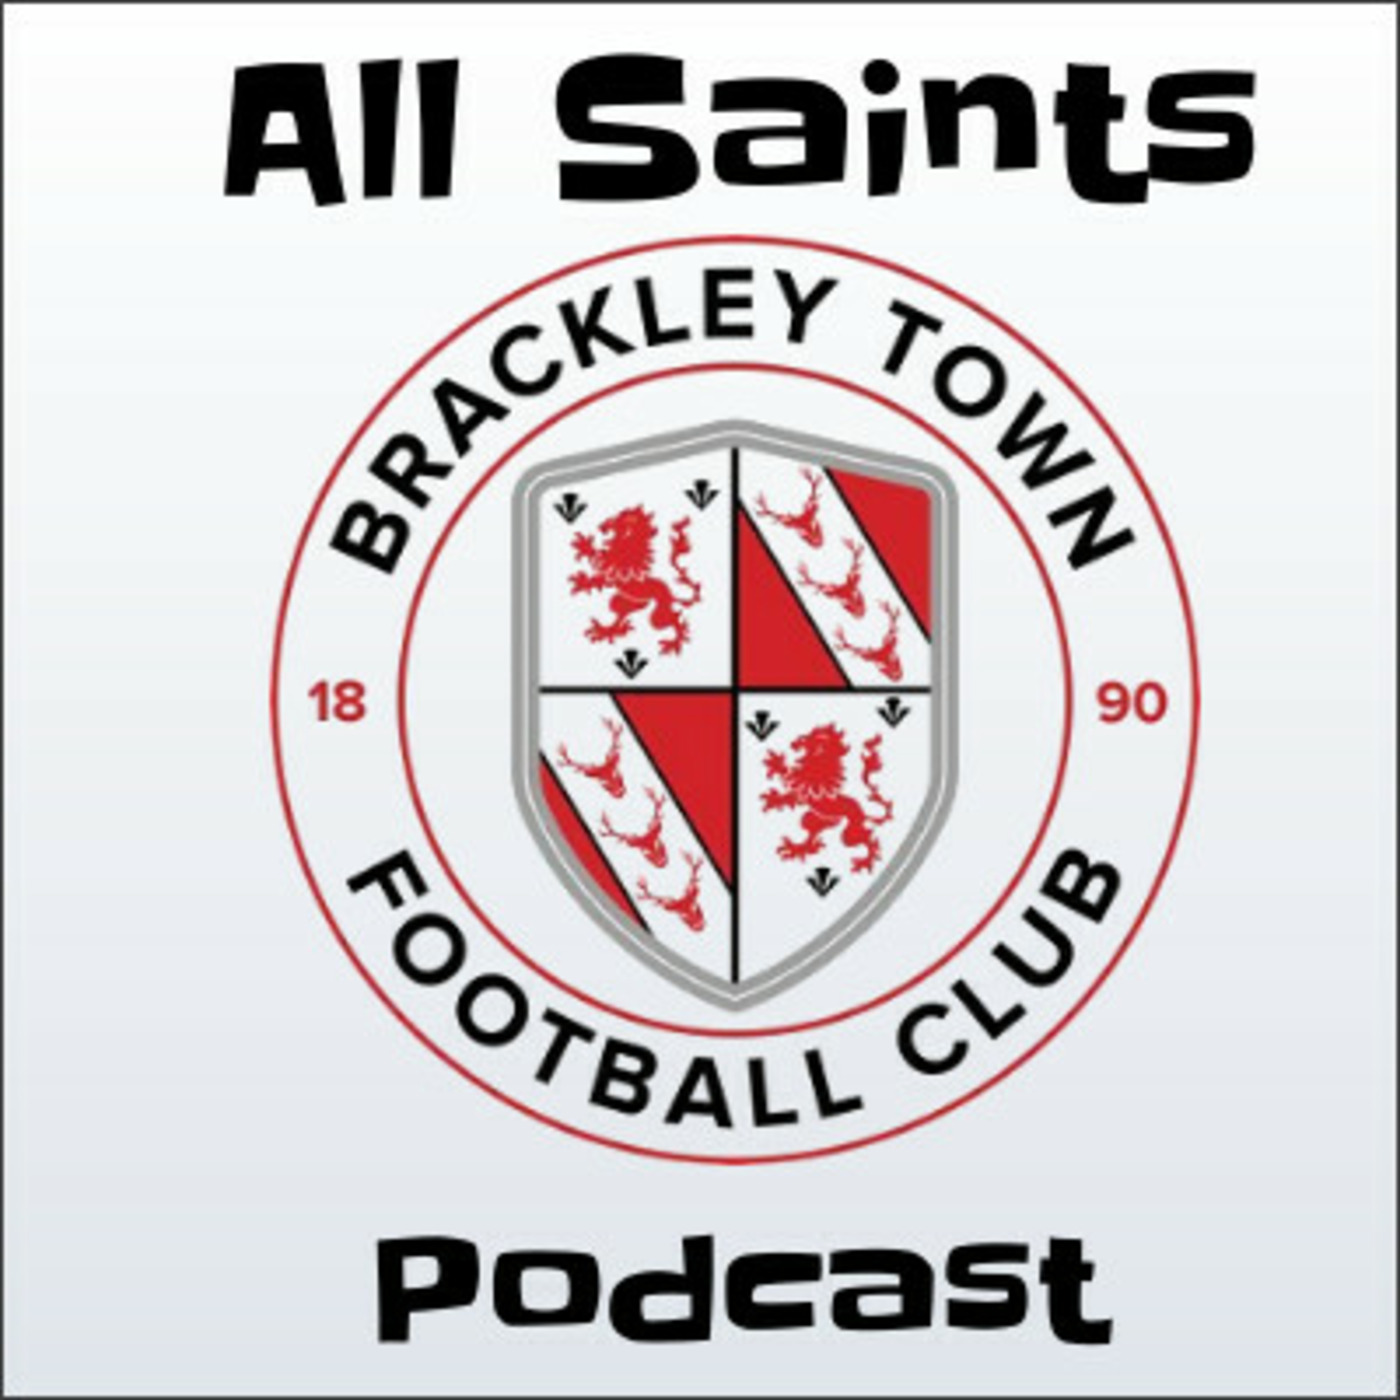 Episode 45: All Saints Podcast 76